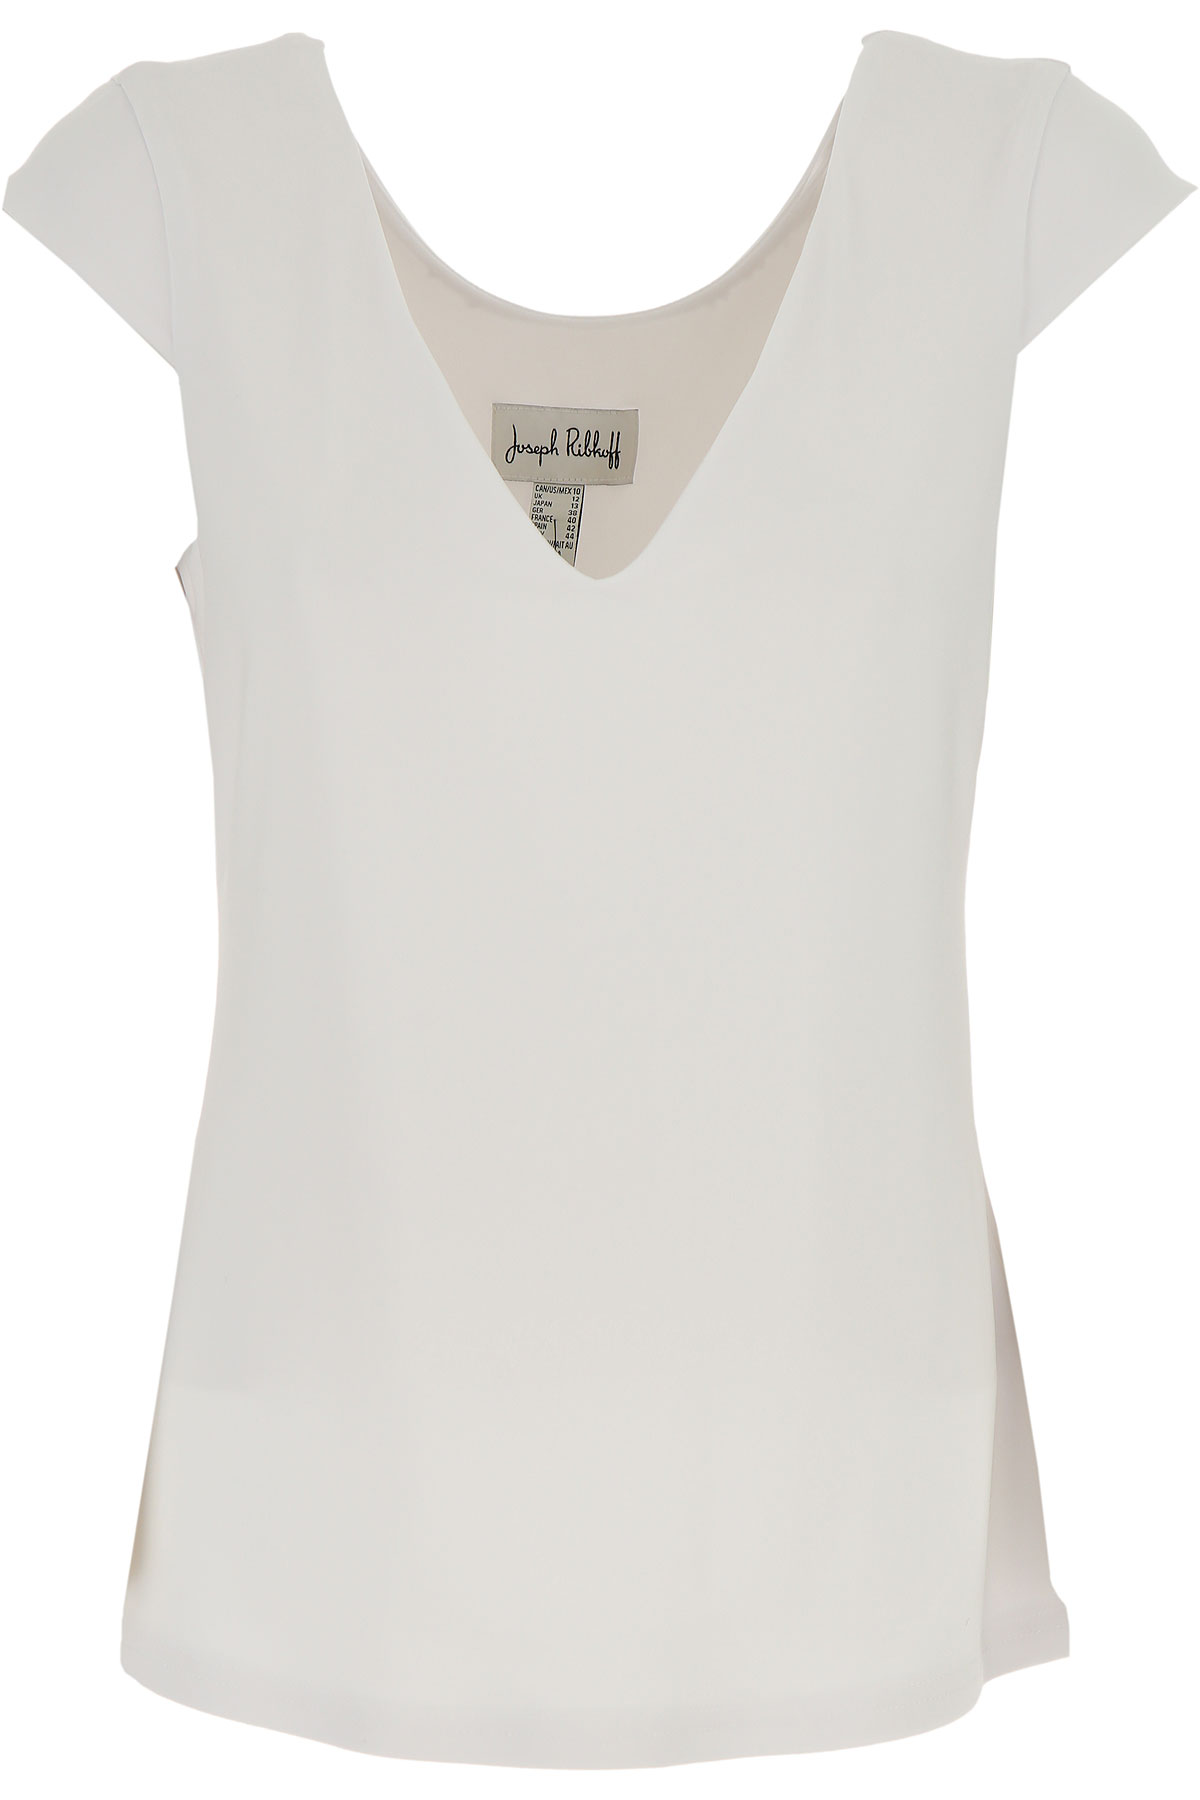 Joseph Ribkoff T-shirt Femme, Blanc, Polyester, 2017, 42 44 46 48